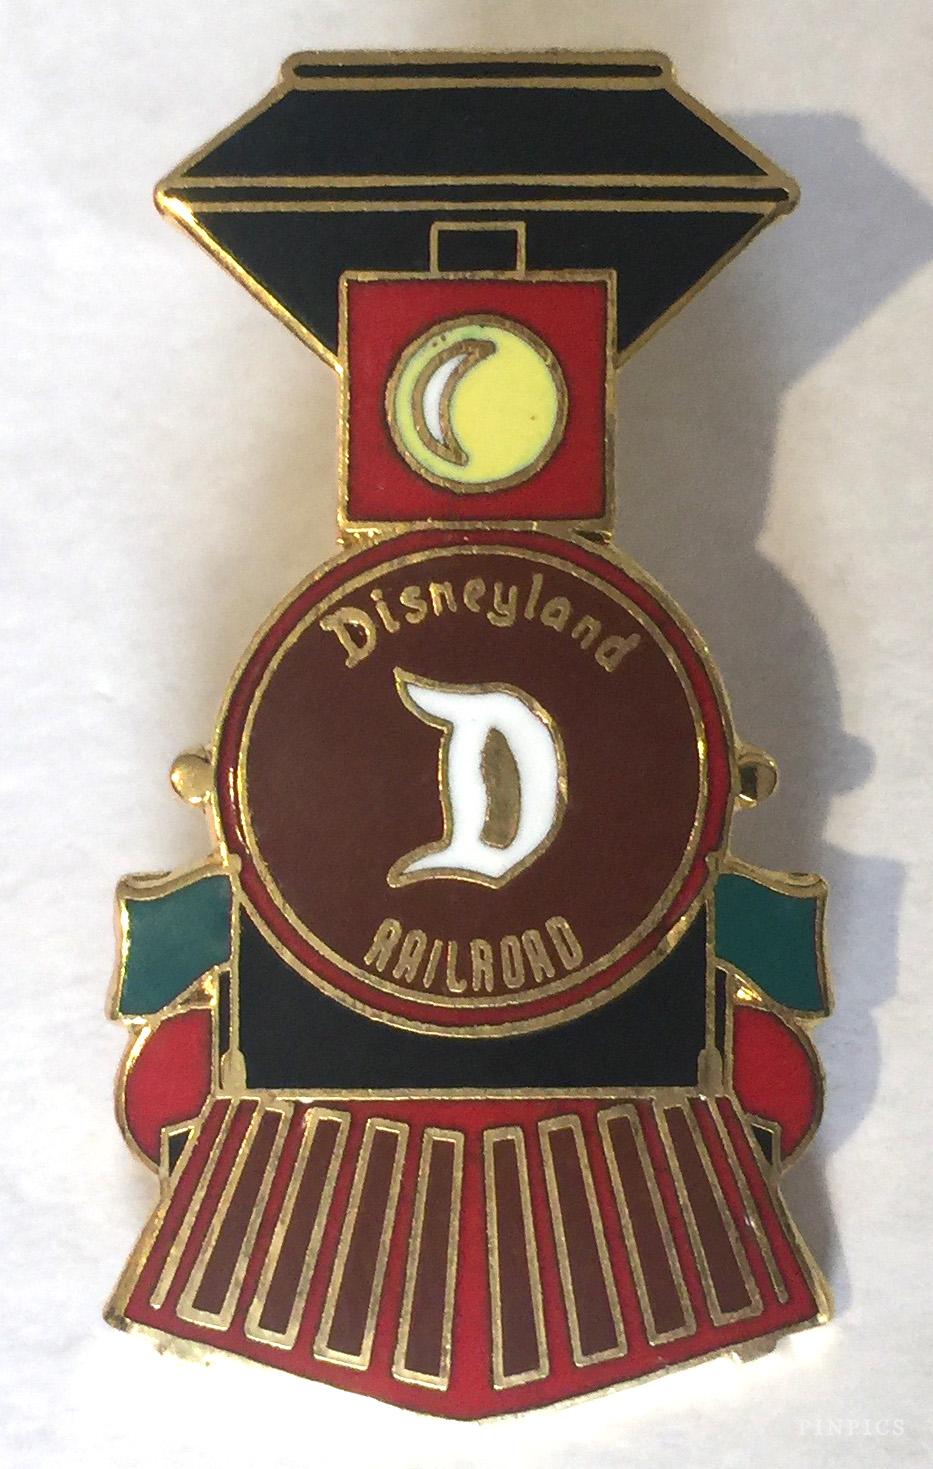 DL - Disneyland Railroad